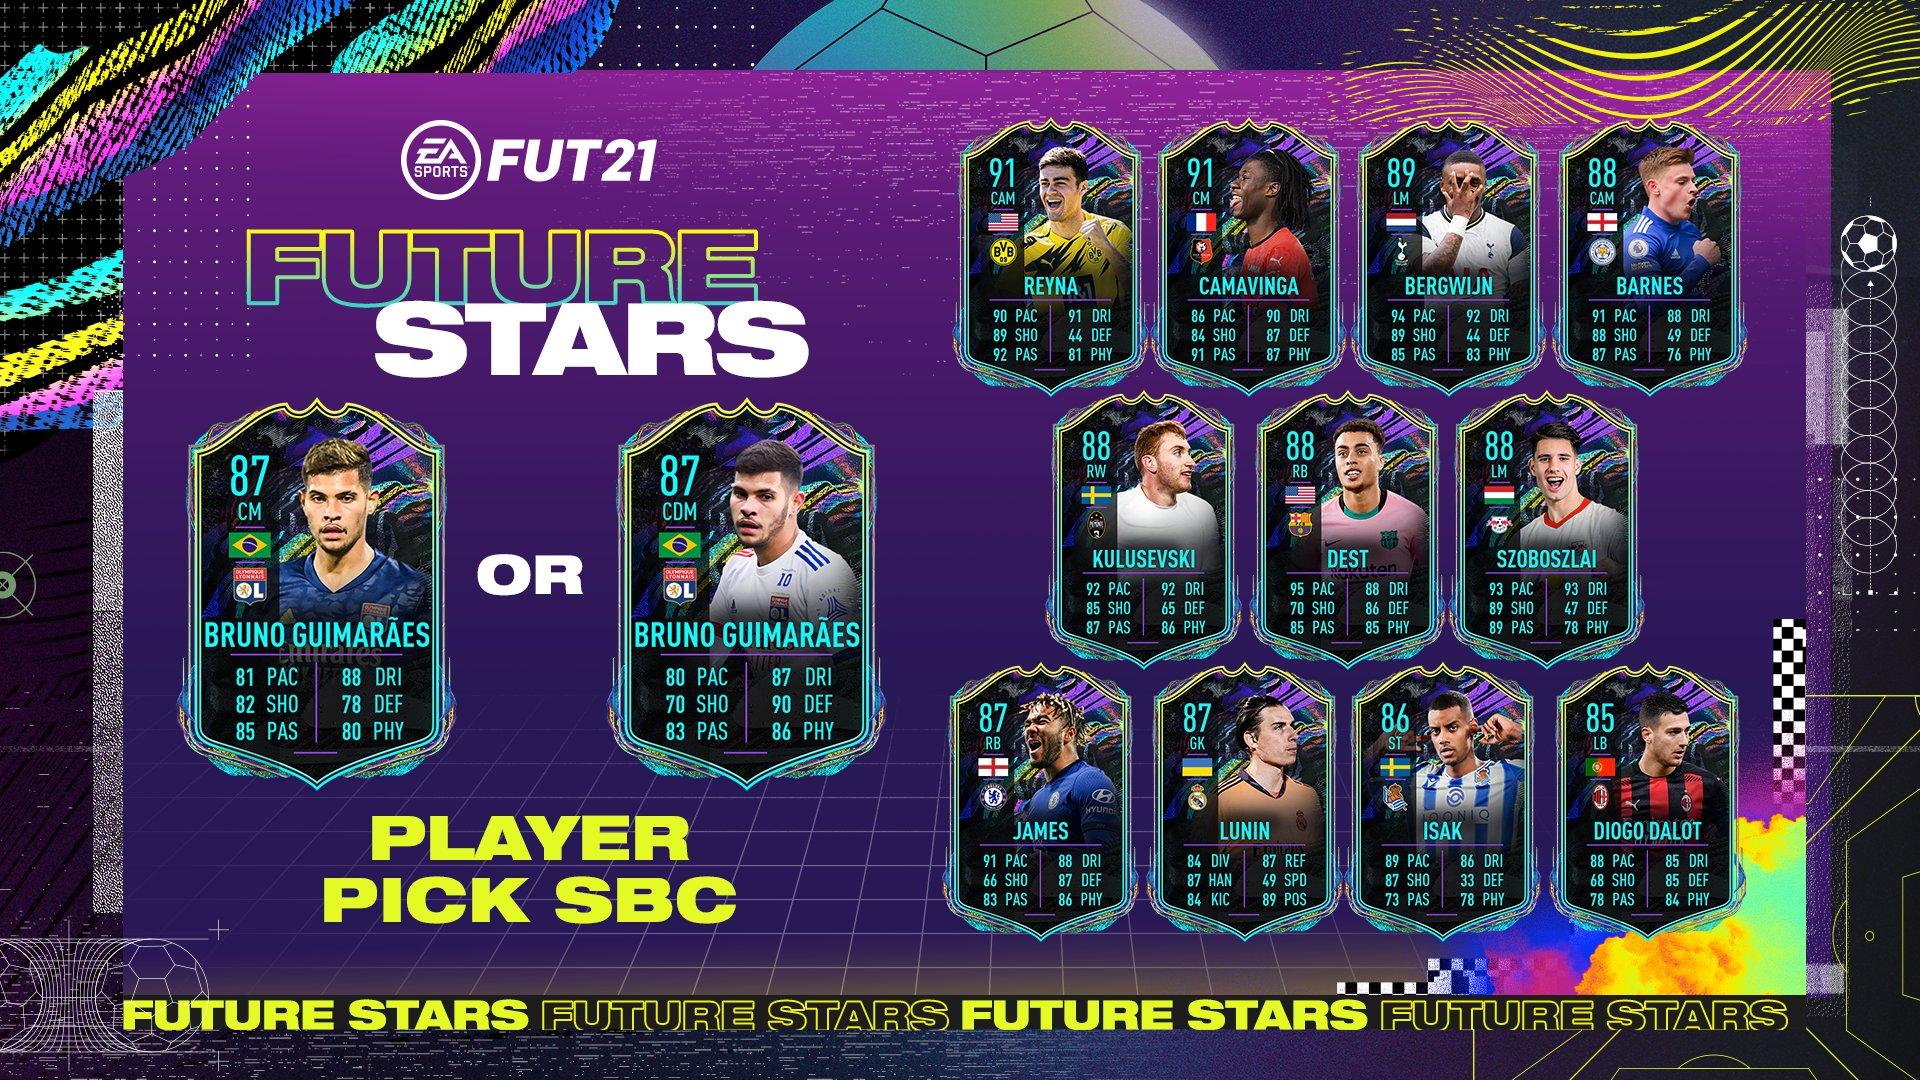 FIFA 21 future stars sbc